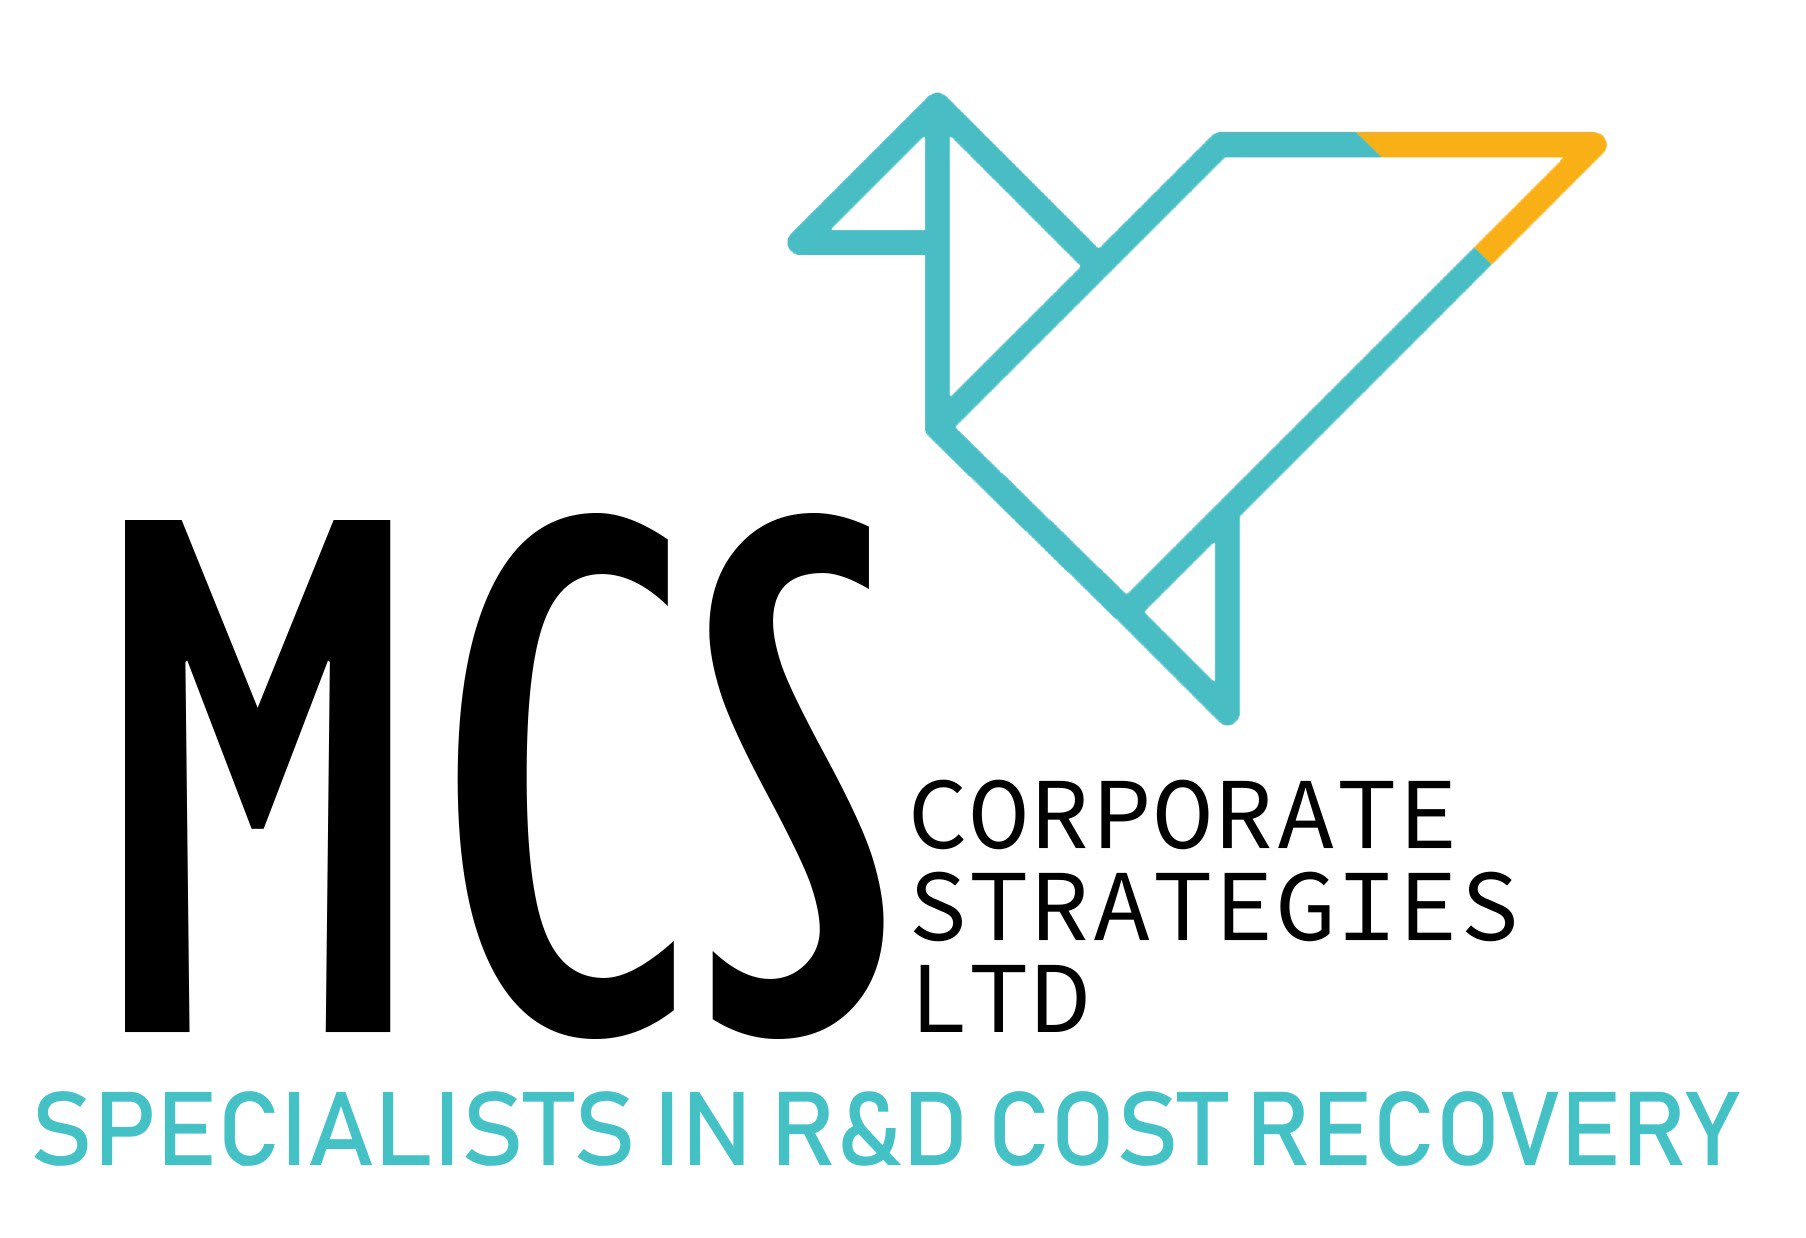 MCS Corporate Strategies Ltd